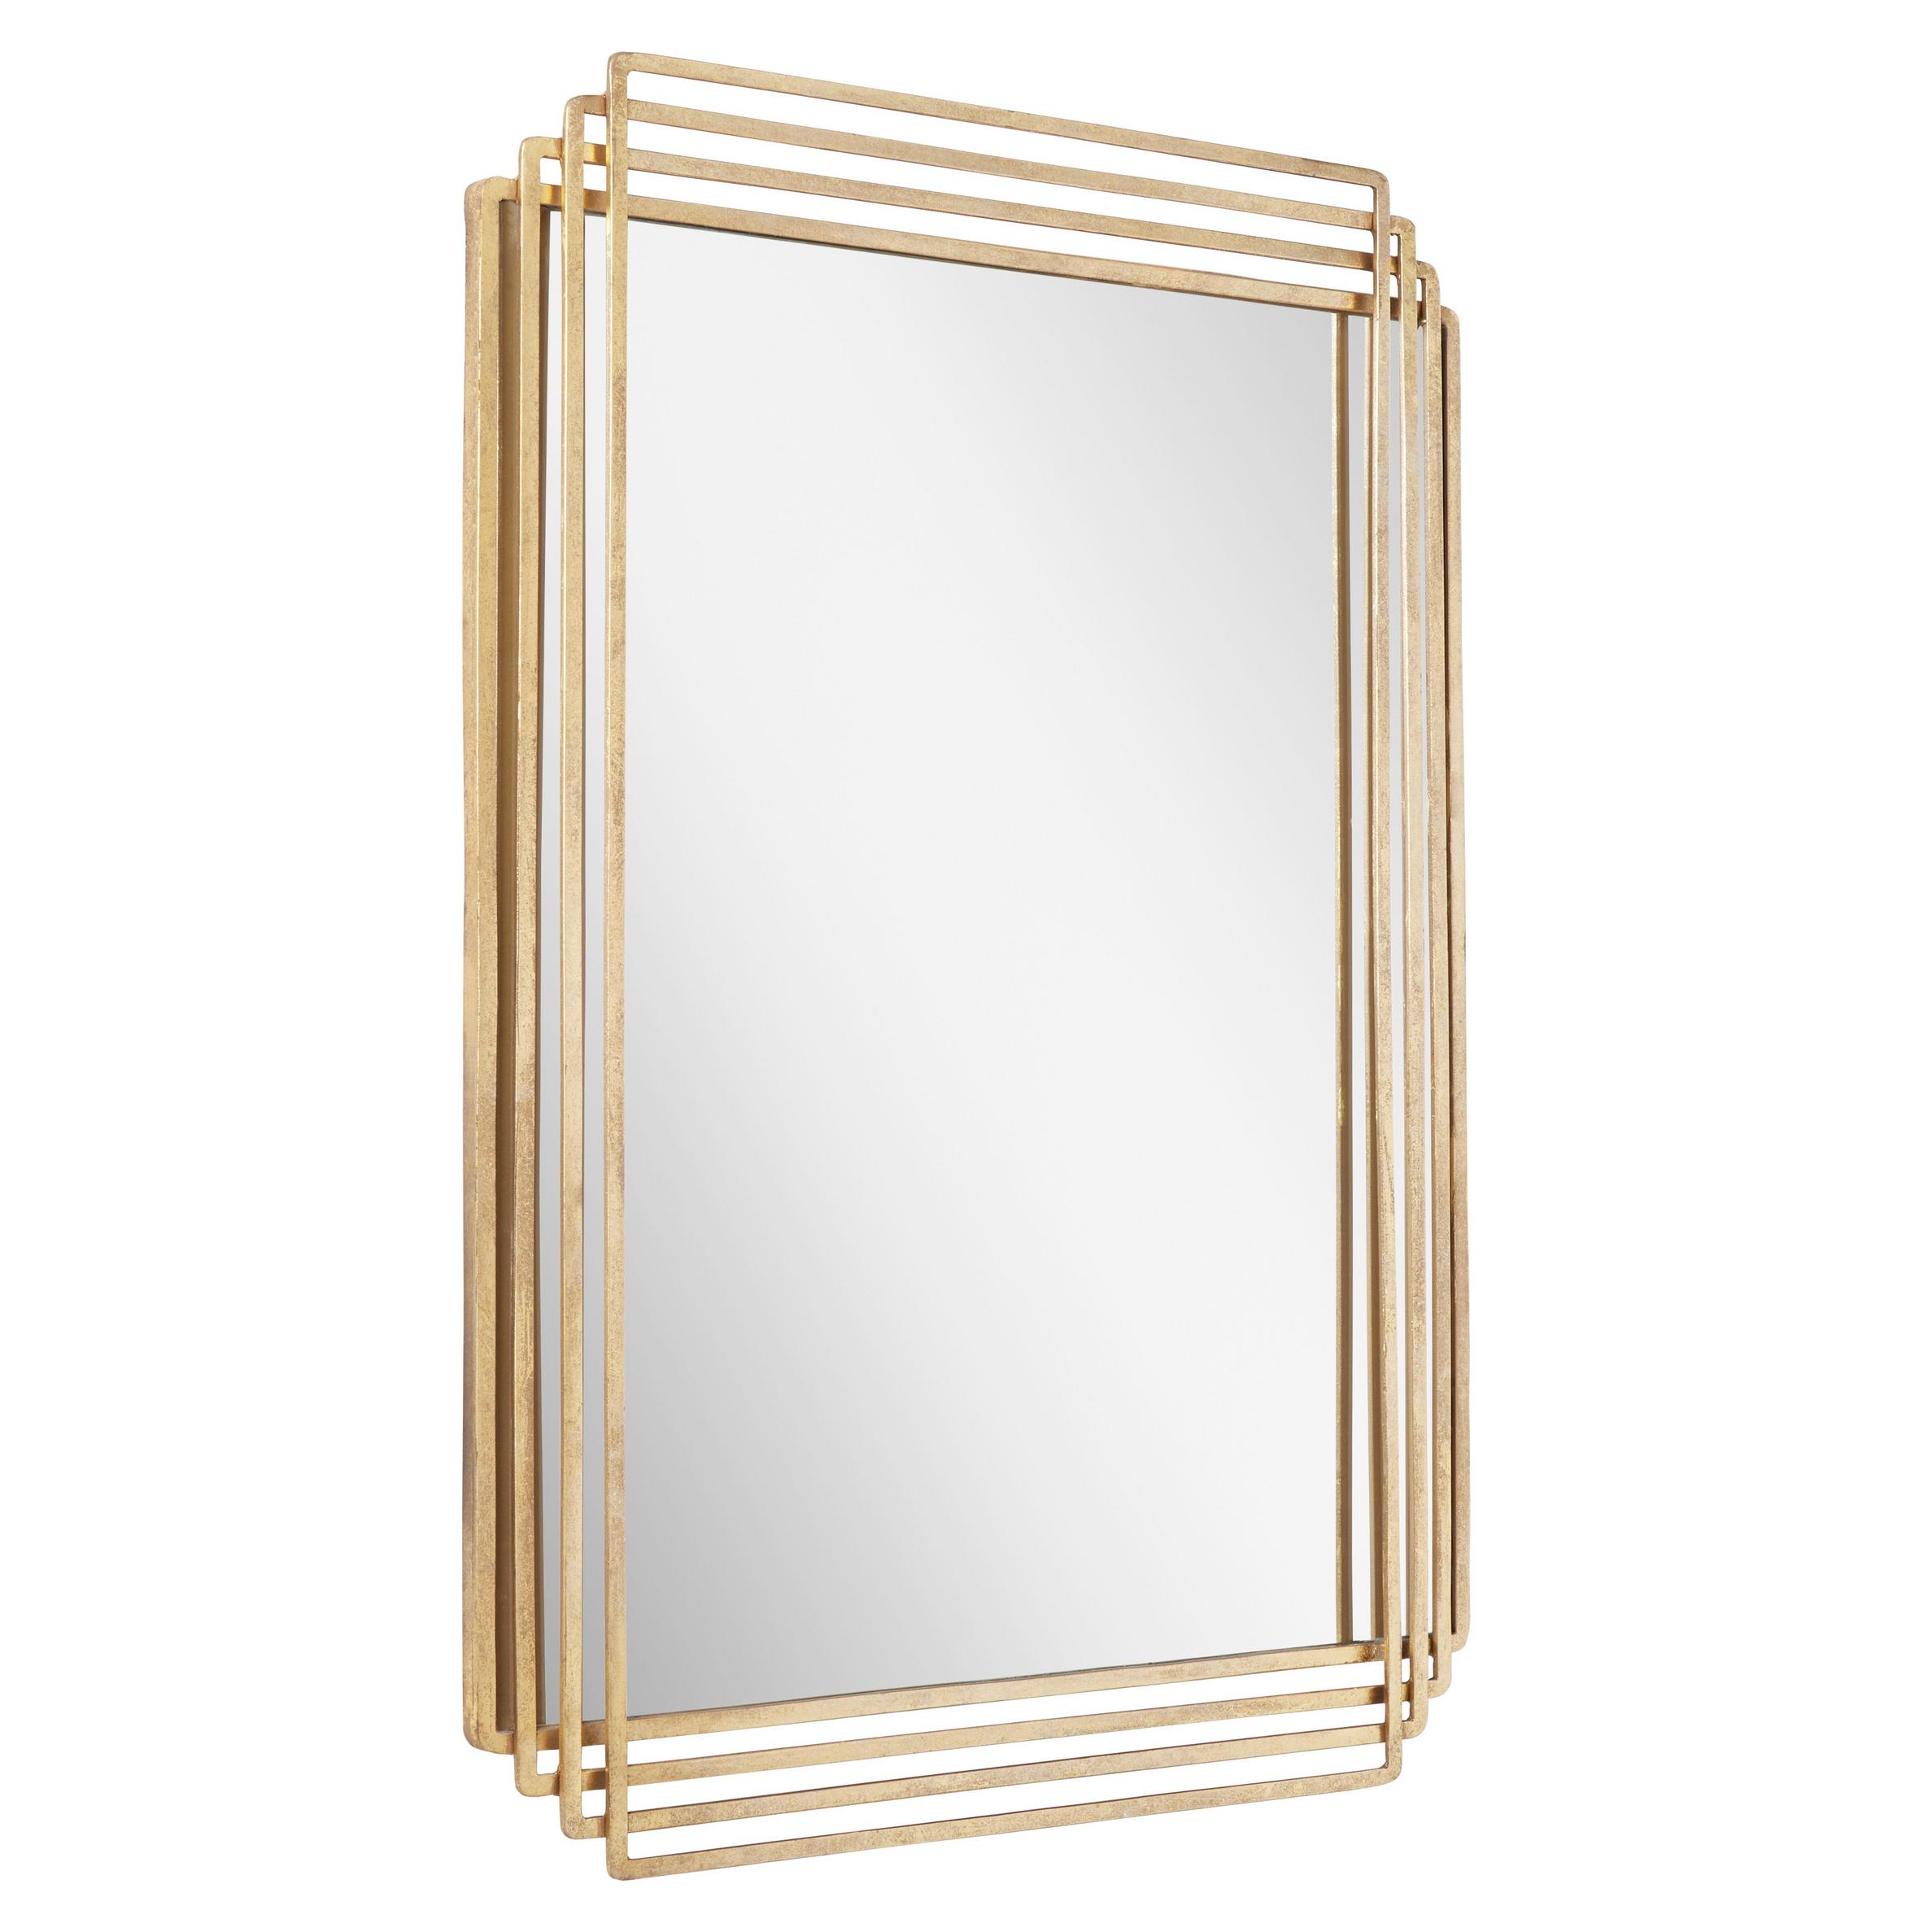 Sethfield Decorative Vanity Mirror - Gold Leaf | Signature Hardware